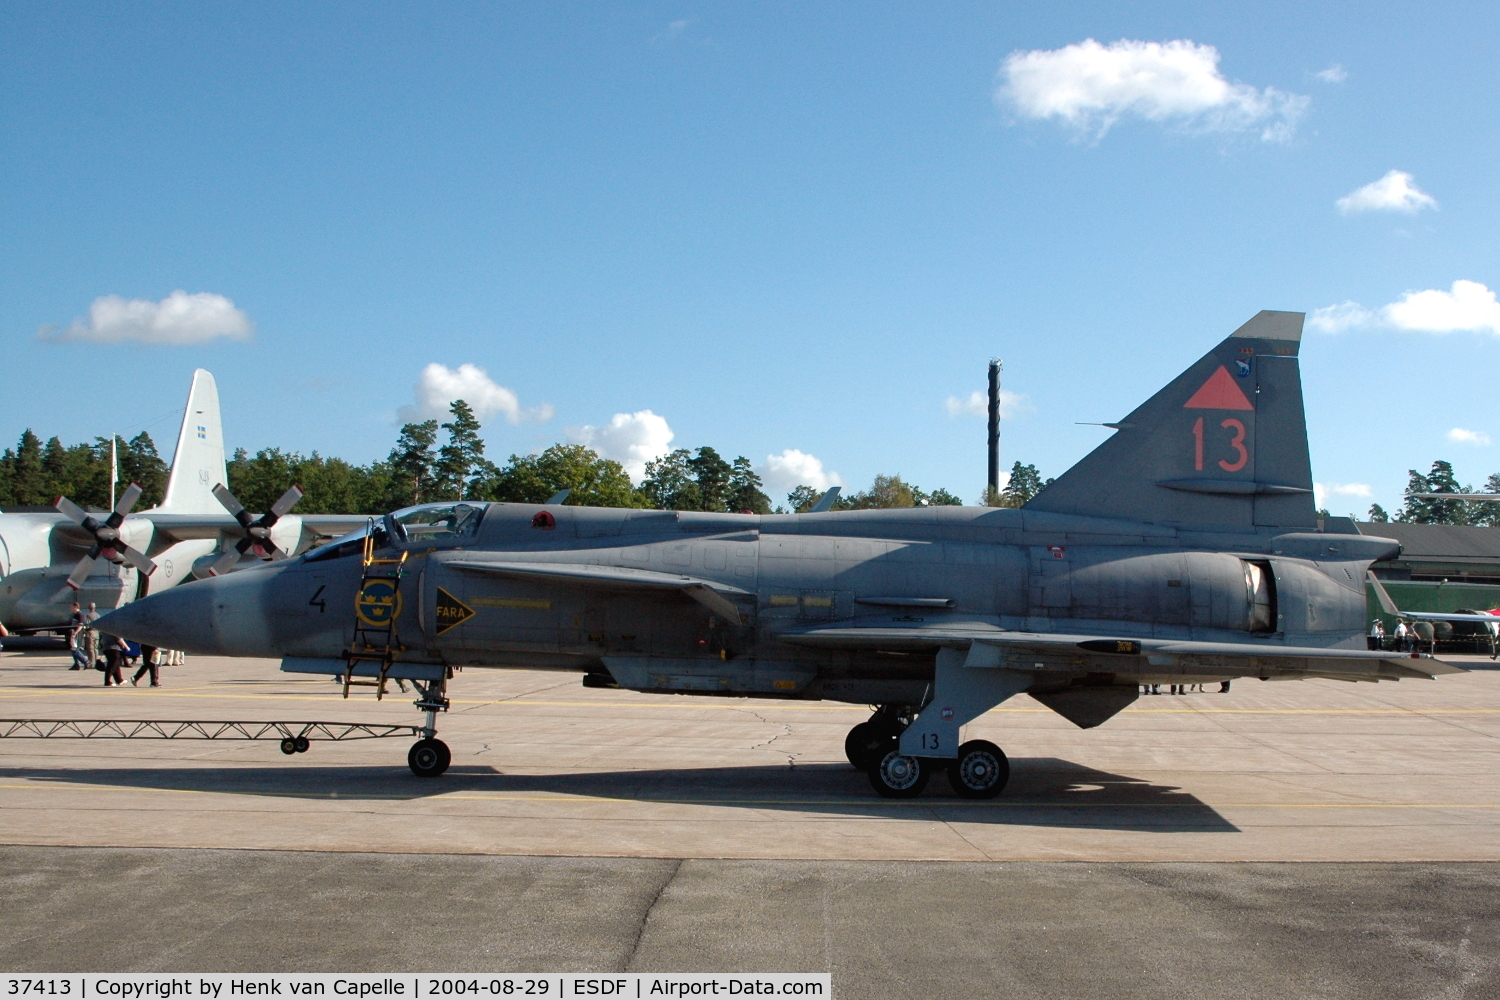 37413, Saab JA 37DI Viggen C/N 37413, Saab JA37DI Viggen fighter of the Swedish Air Force at Ronneby Air Base.